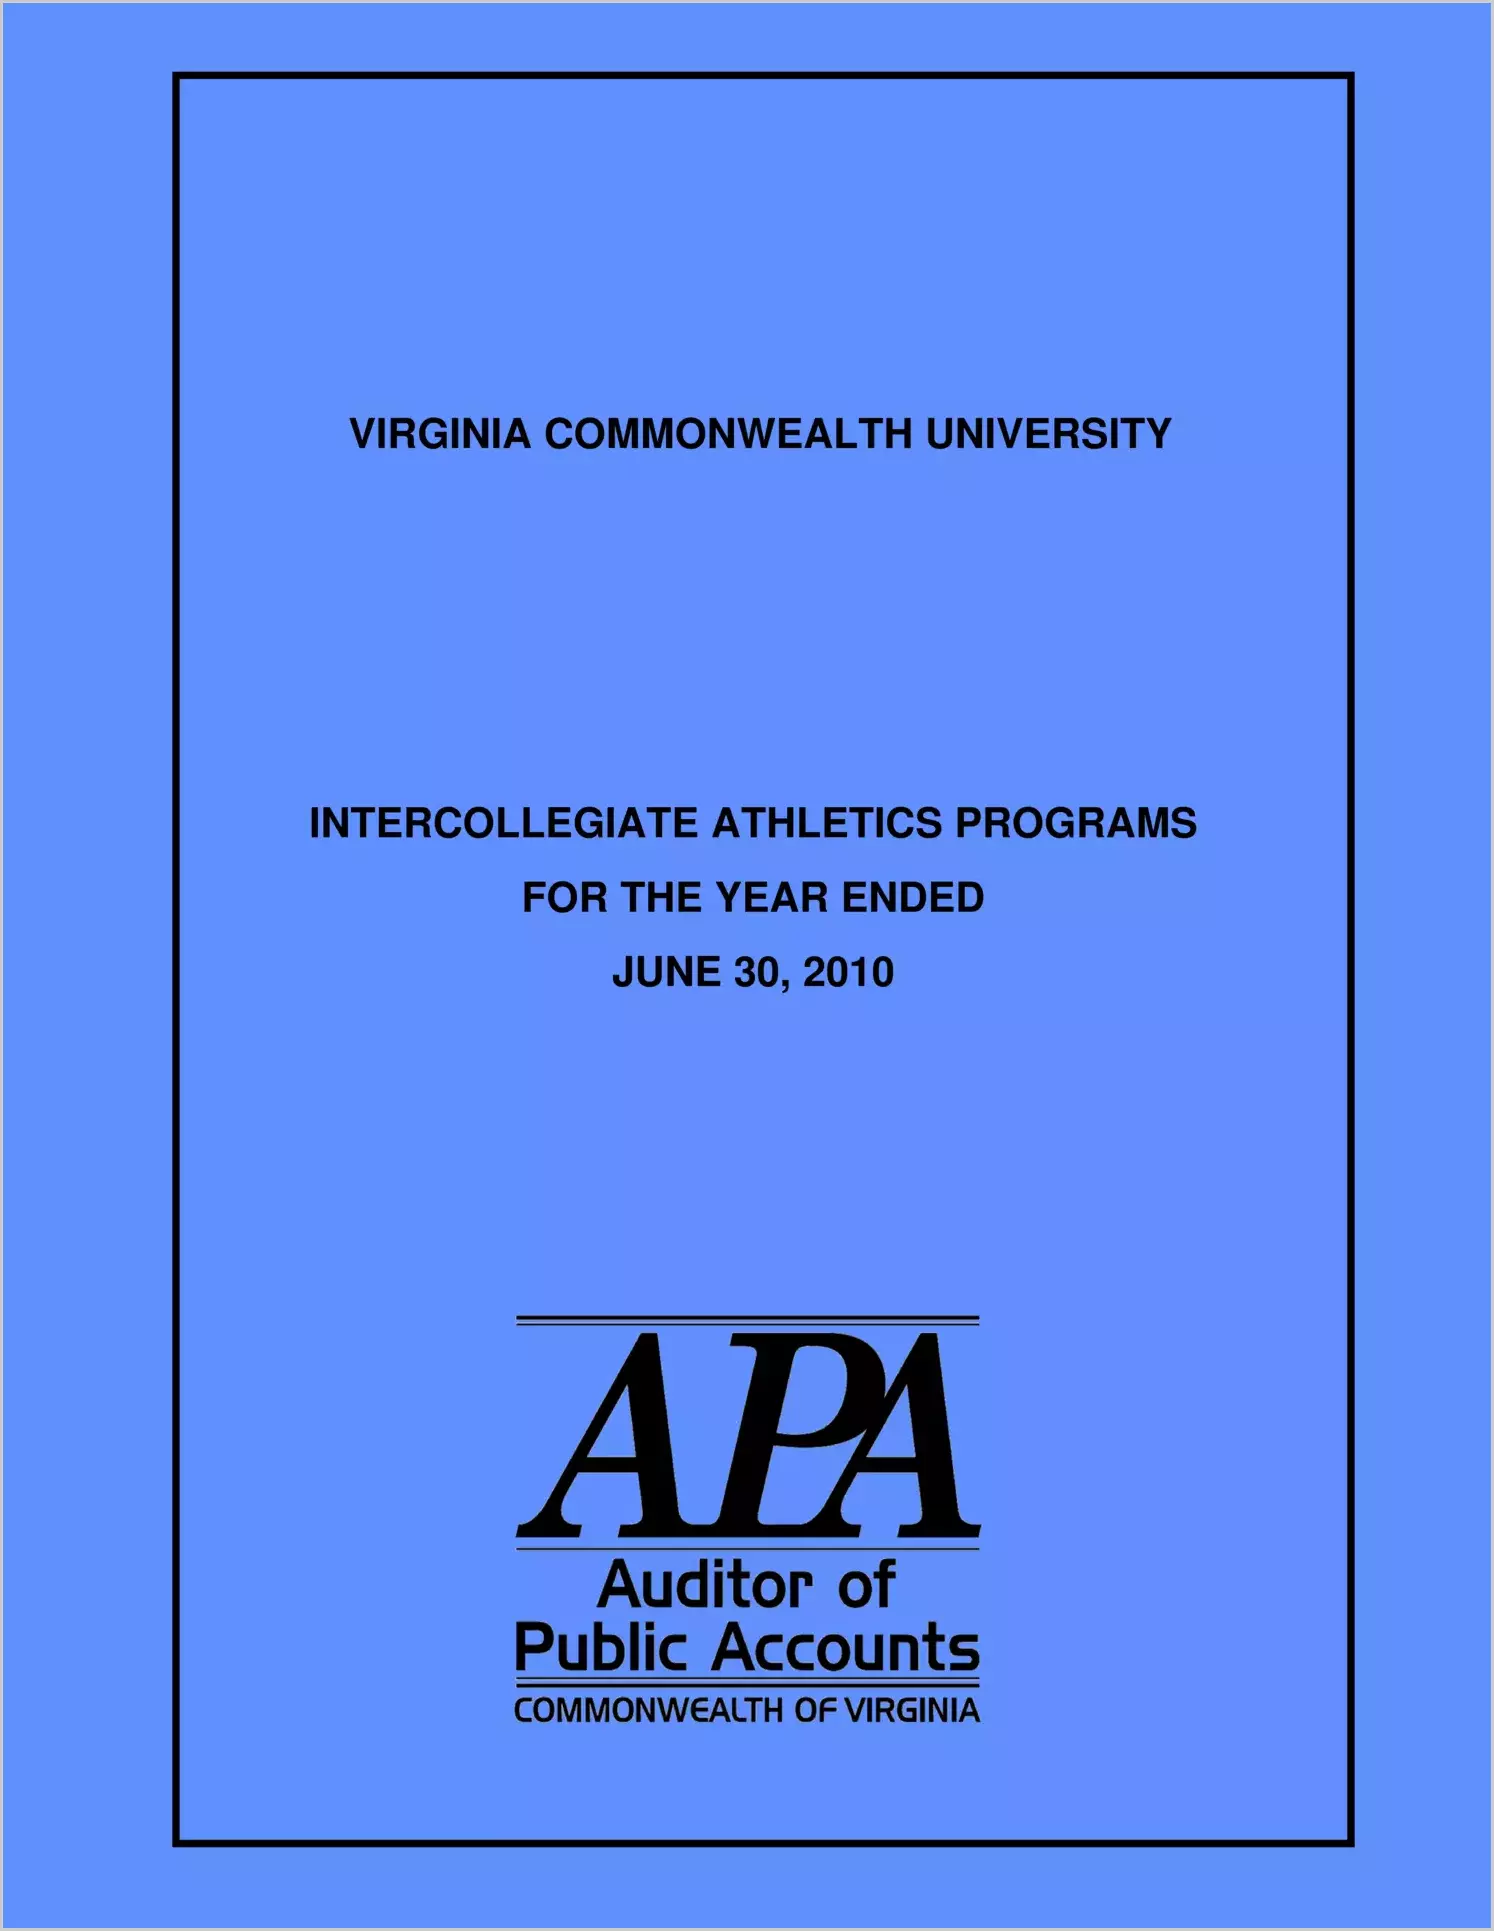 Virginia Commonwealth University Intercollegiate Athletics Programs for the year ended June 30, 2010